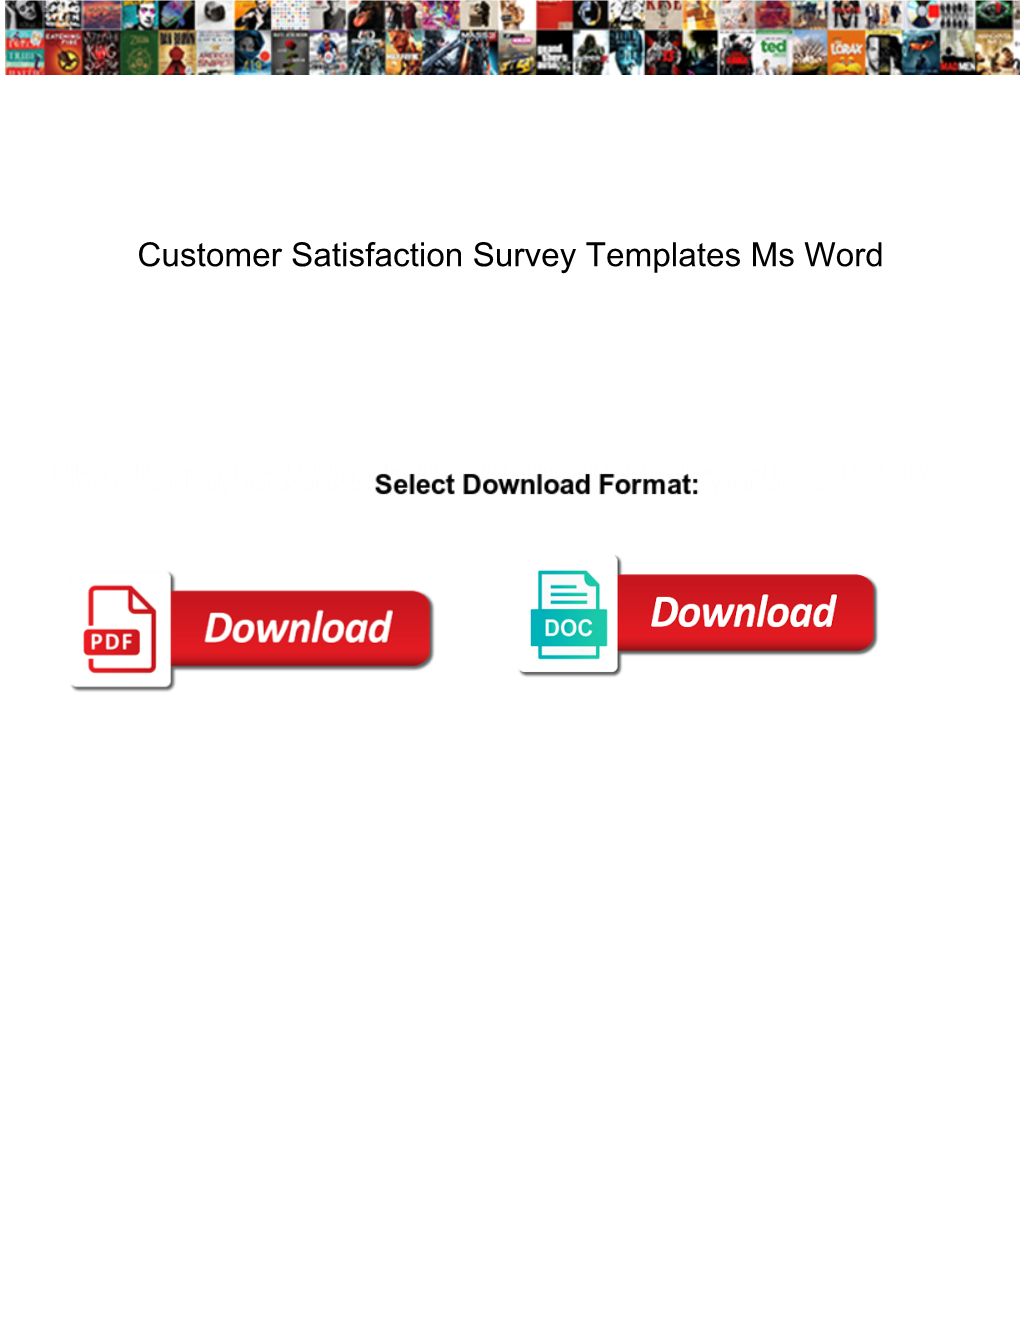 Customer Satisfaction Survey Templates Ms Word